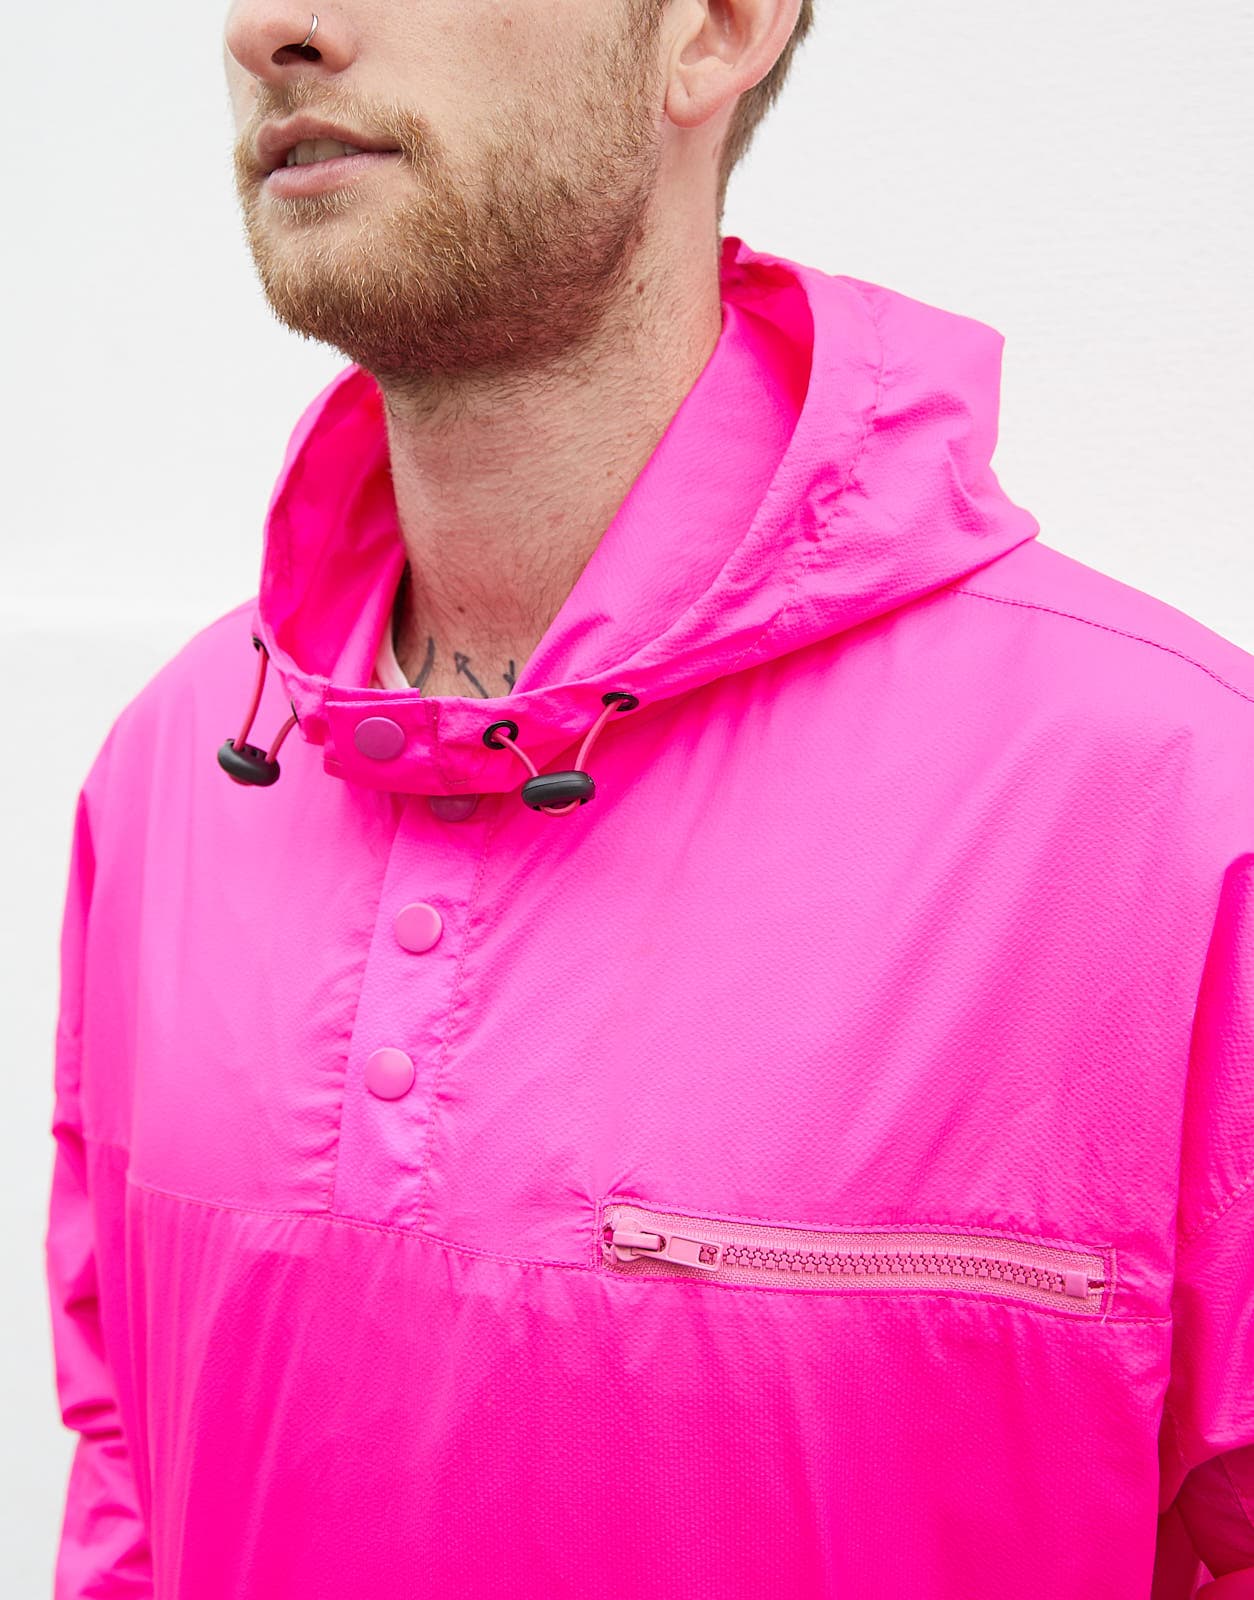 ASOS's Tom wears a neon pink jacket